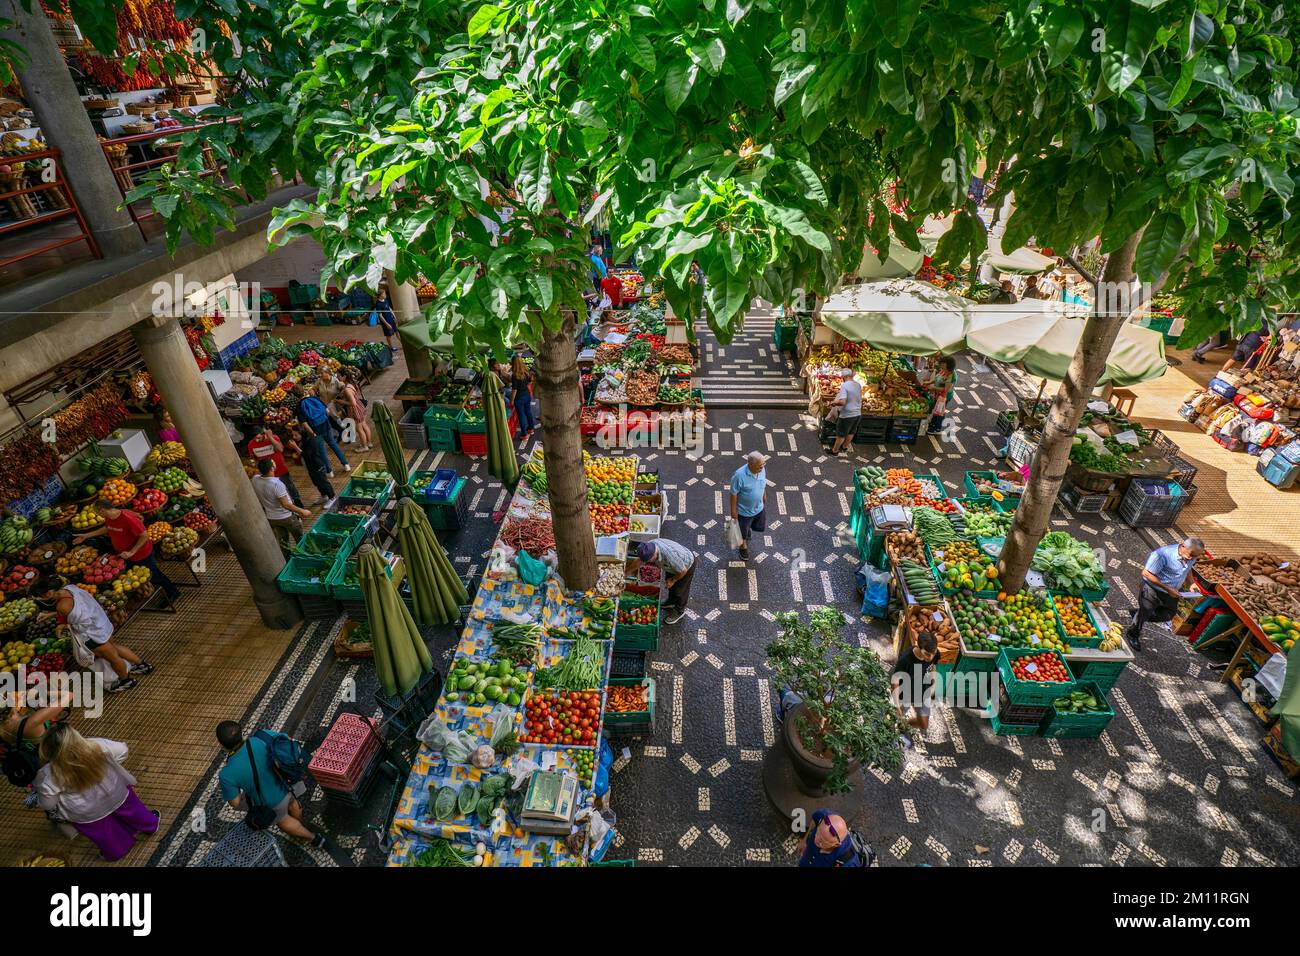 Mercado dos Lavradores in Funchal on the Portuguese island of Madeira Stock Photo